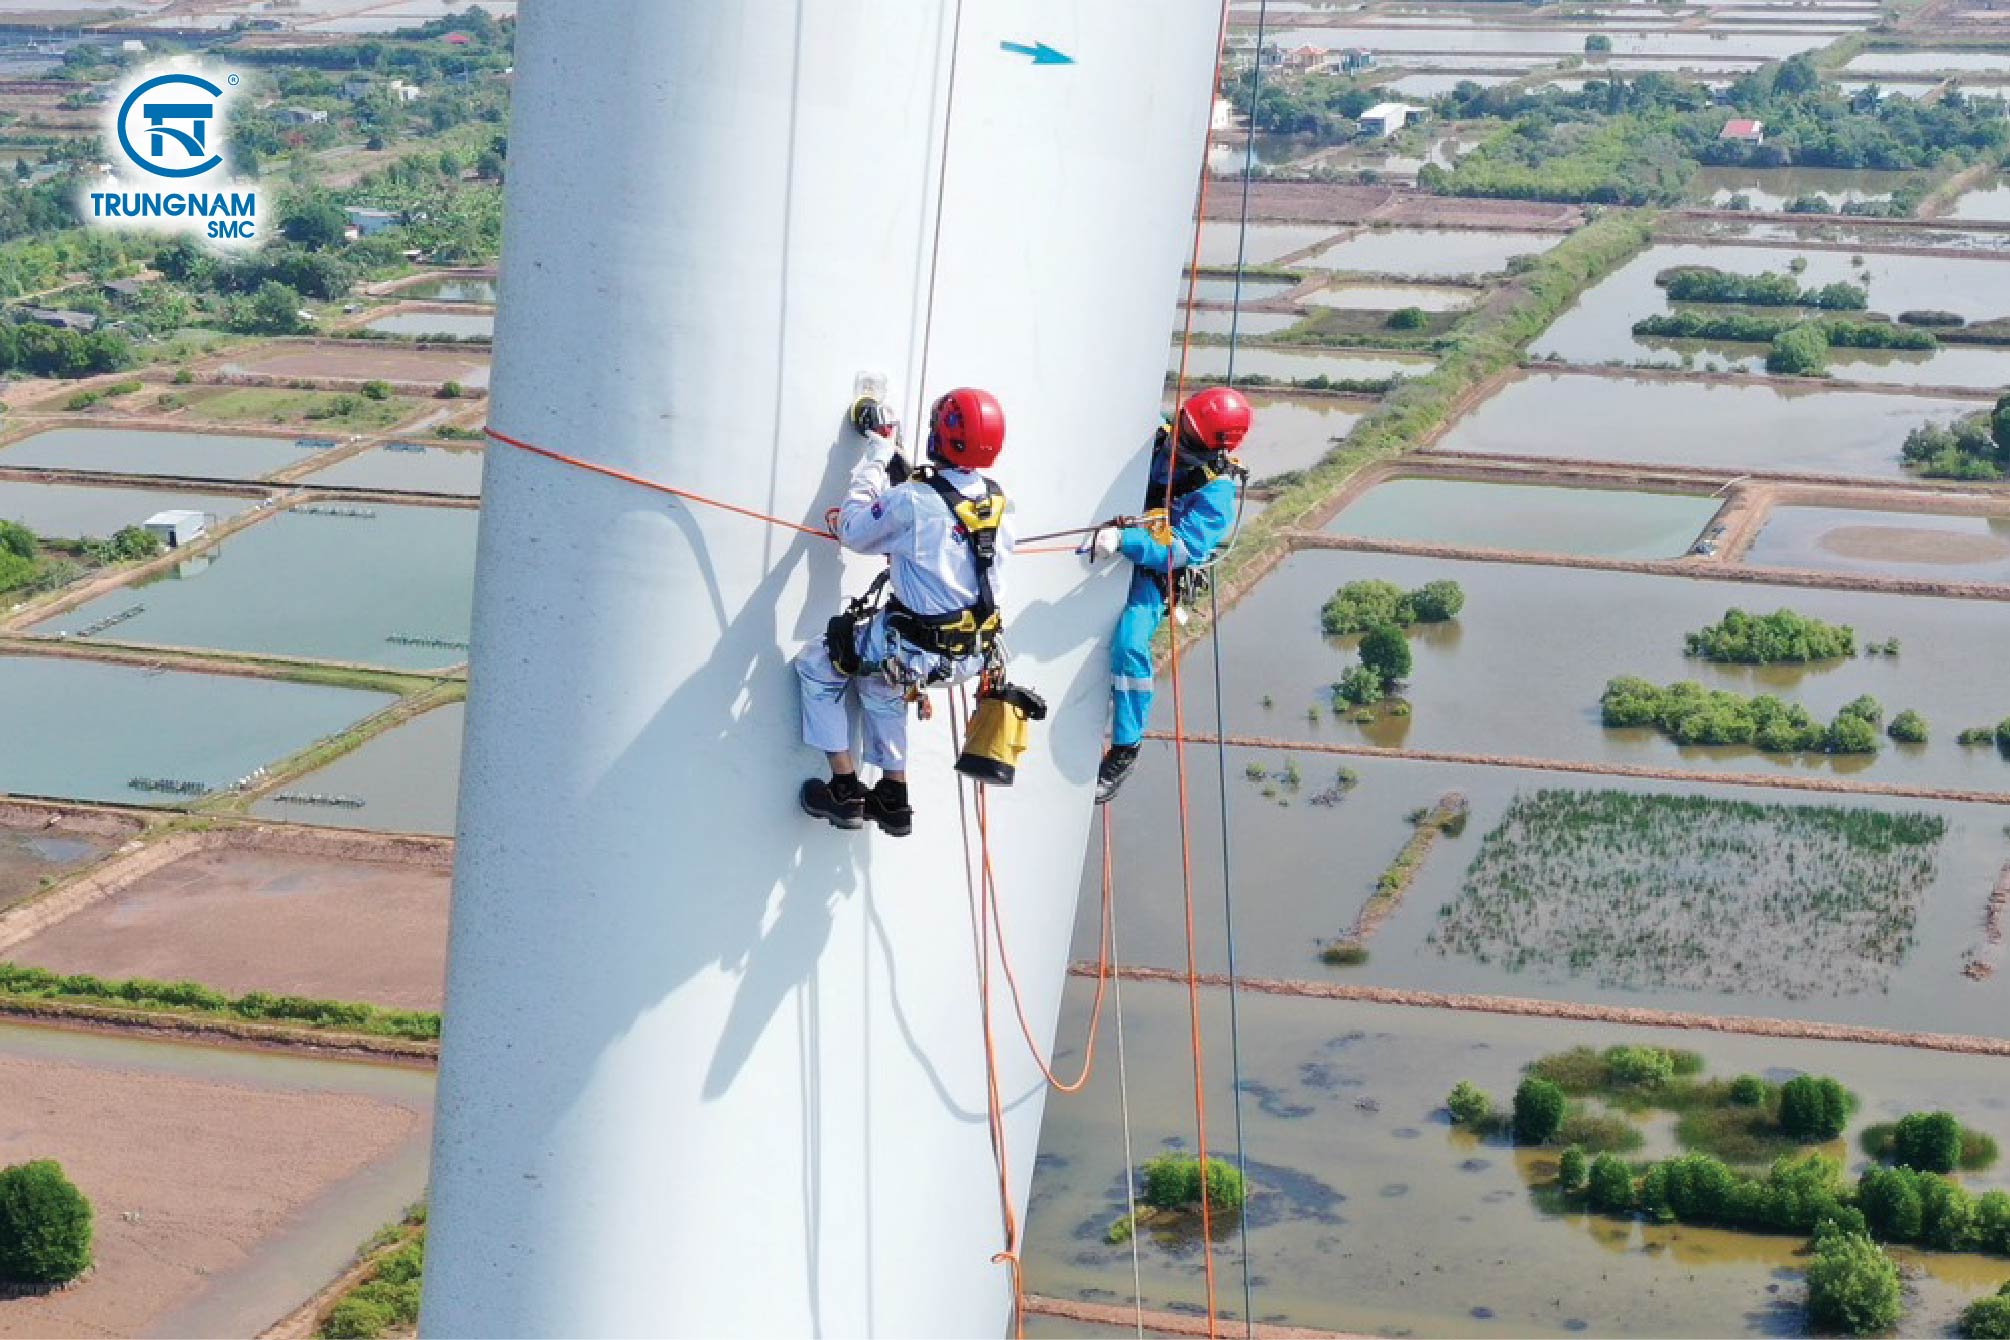 Repairing turbine blades by rope access method at Hoa Binh 5 Bac Lieu Wind Farm